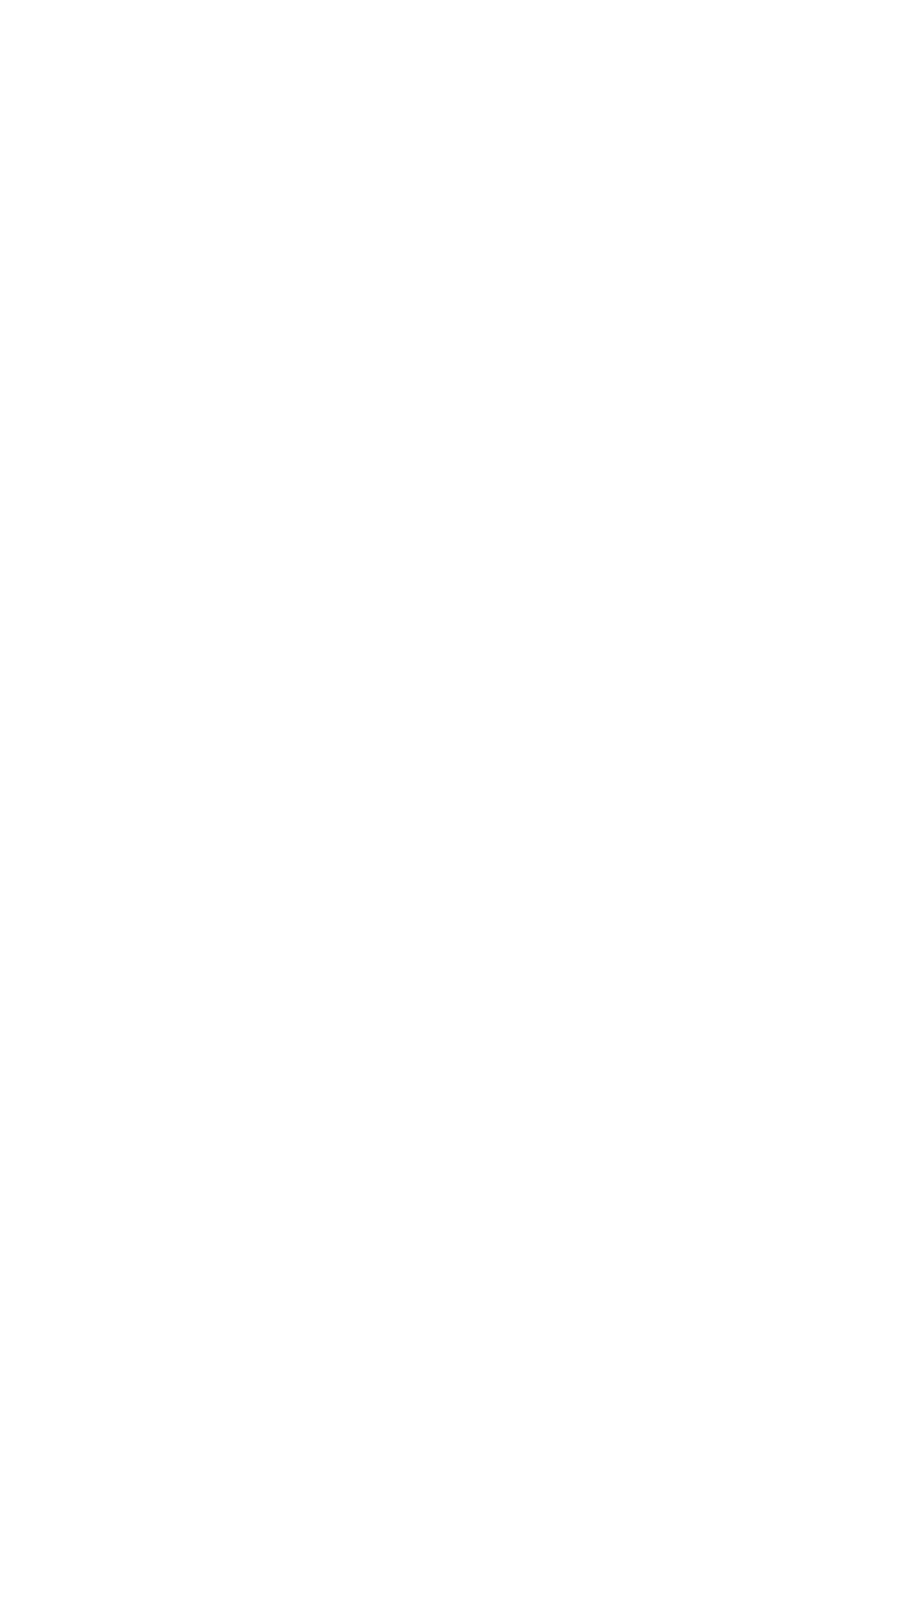 Dassault Aviation logo pour fonds sombres (PNG transparent)